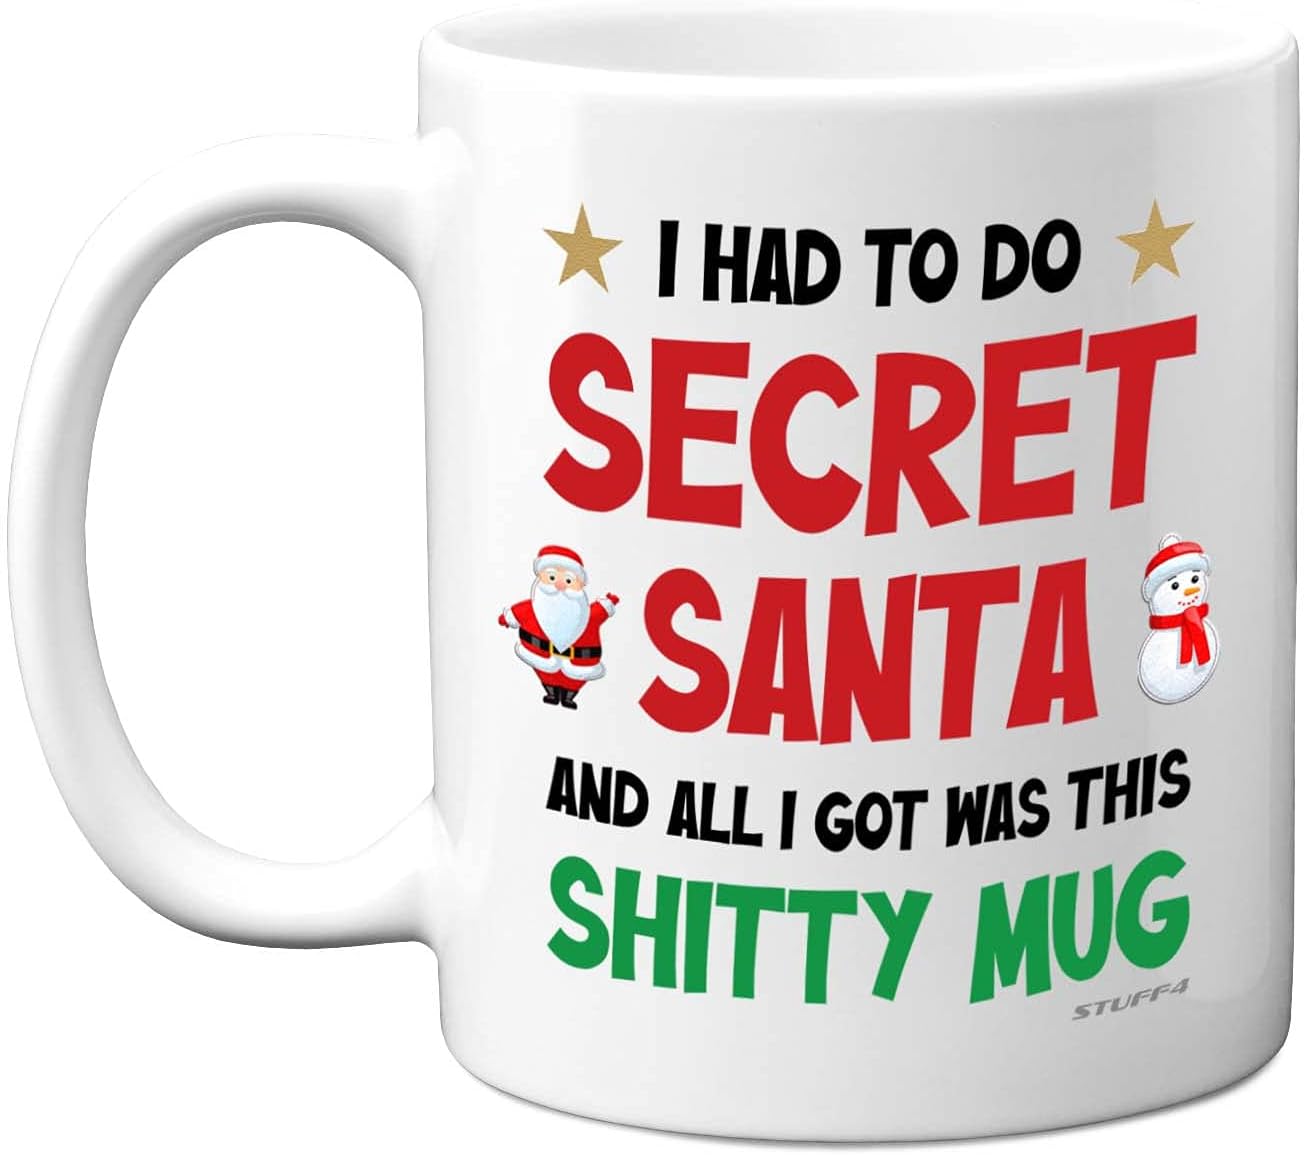 Funny Secret Santa Gifts - All I Got Was This Sh*tty Mug - Sarcastic Gift for Work Colleagues Under 10 pounds, Rude Xmas Gift Ideas, Novelty Christmas Mug for Friends, 11oz Ceramic Dishwasher Safe Mug